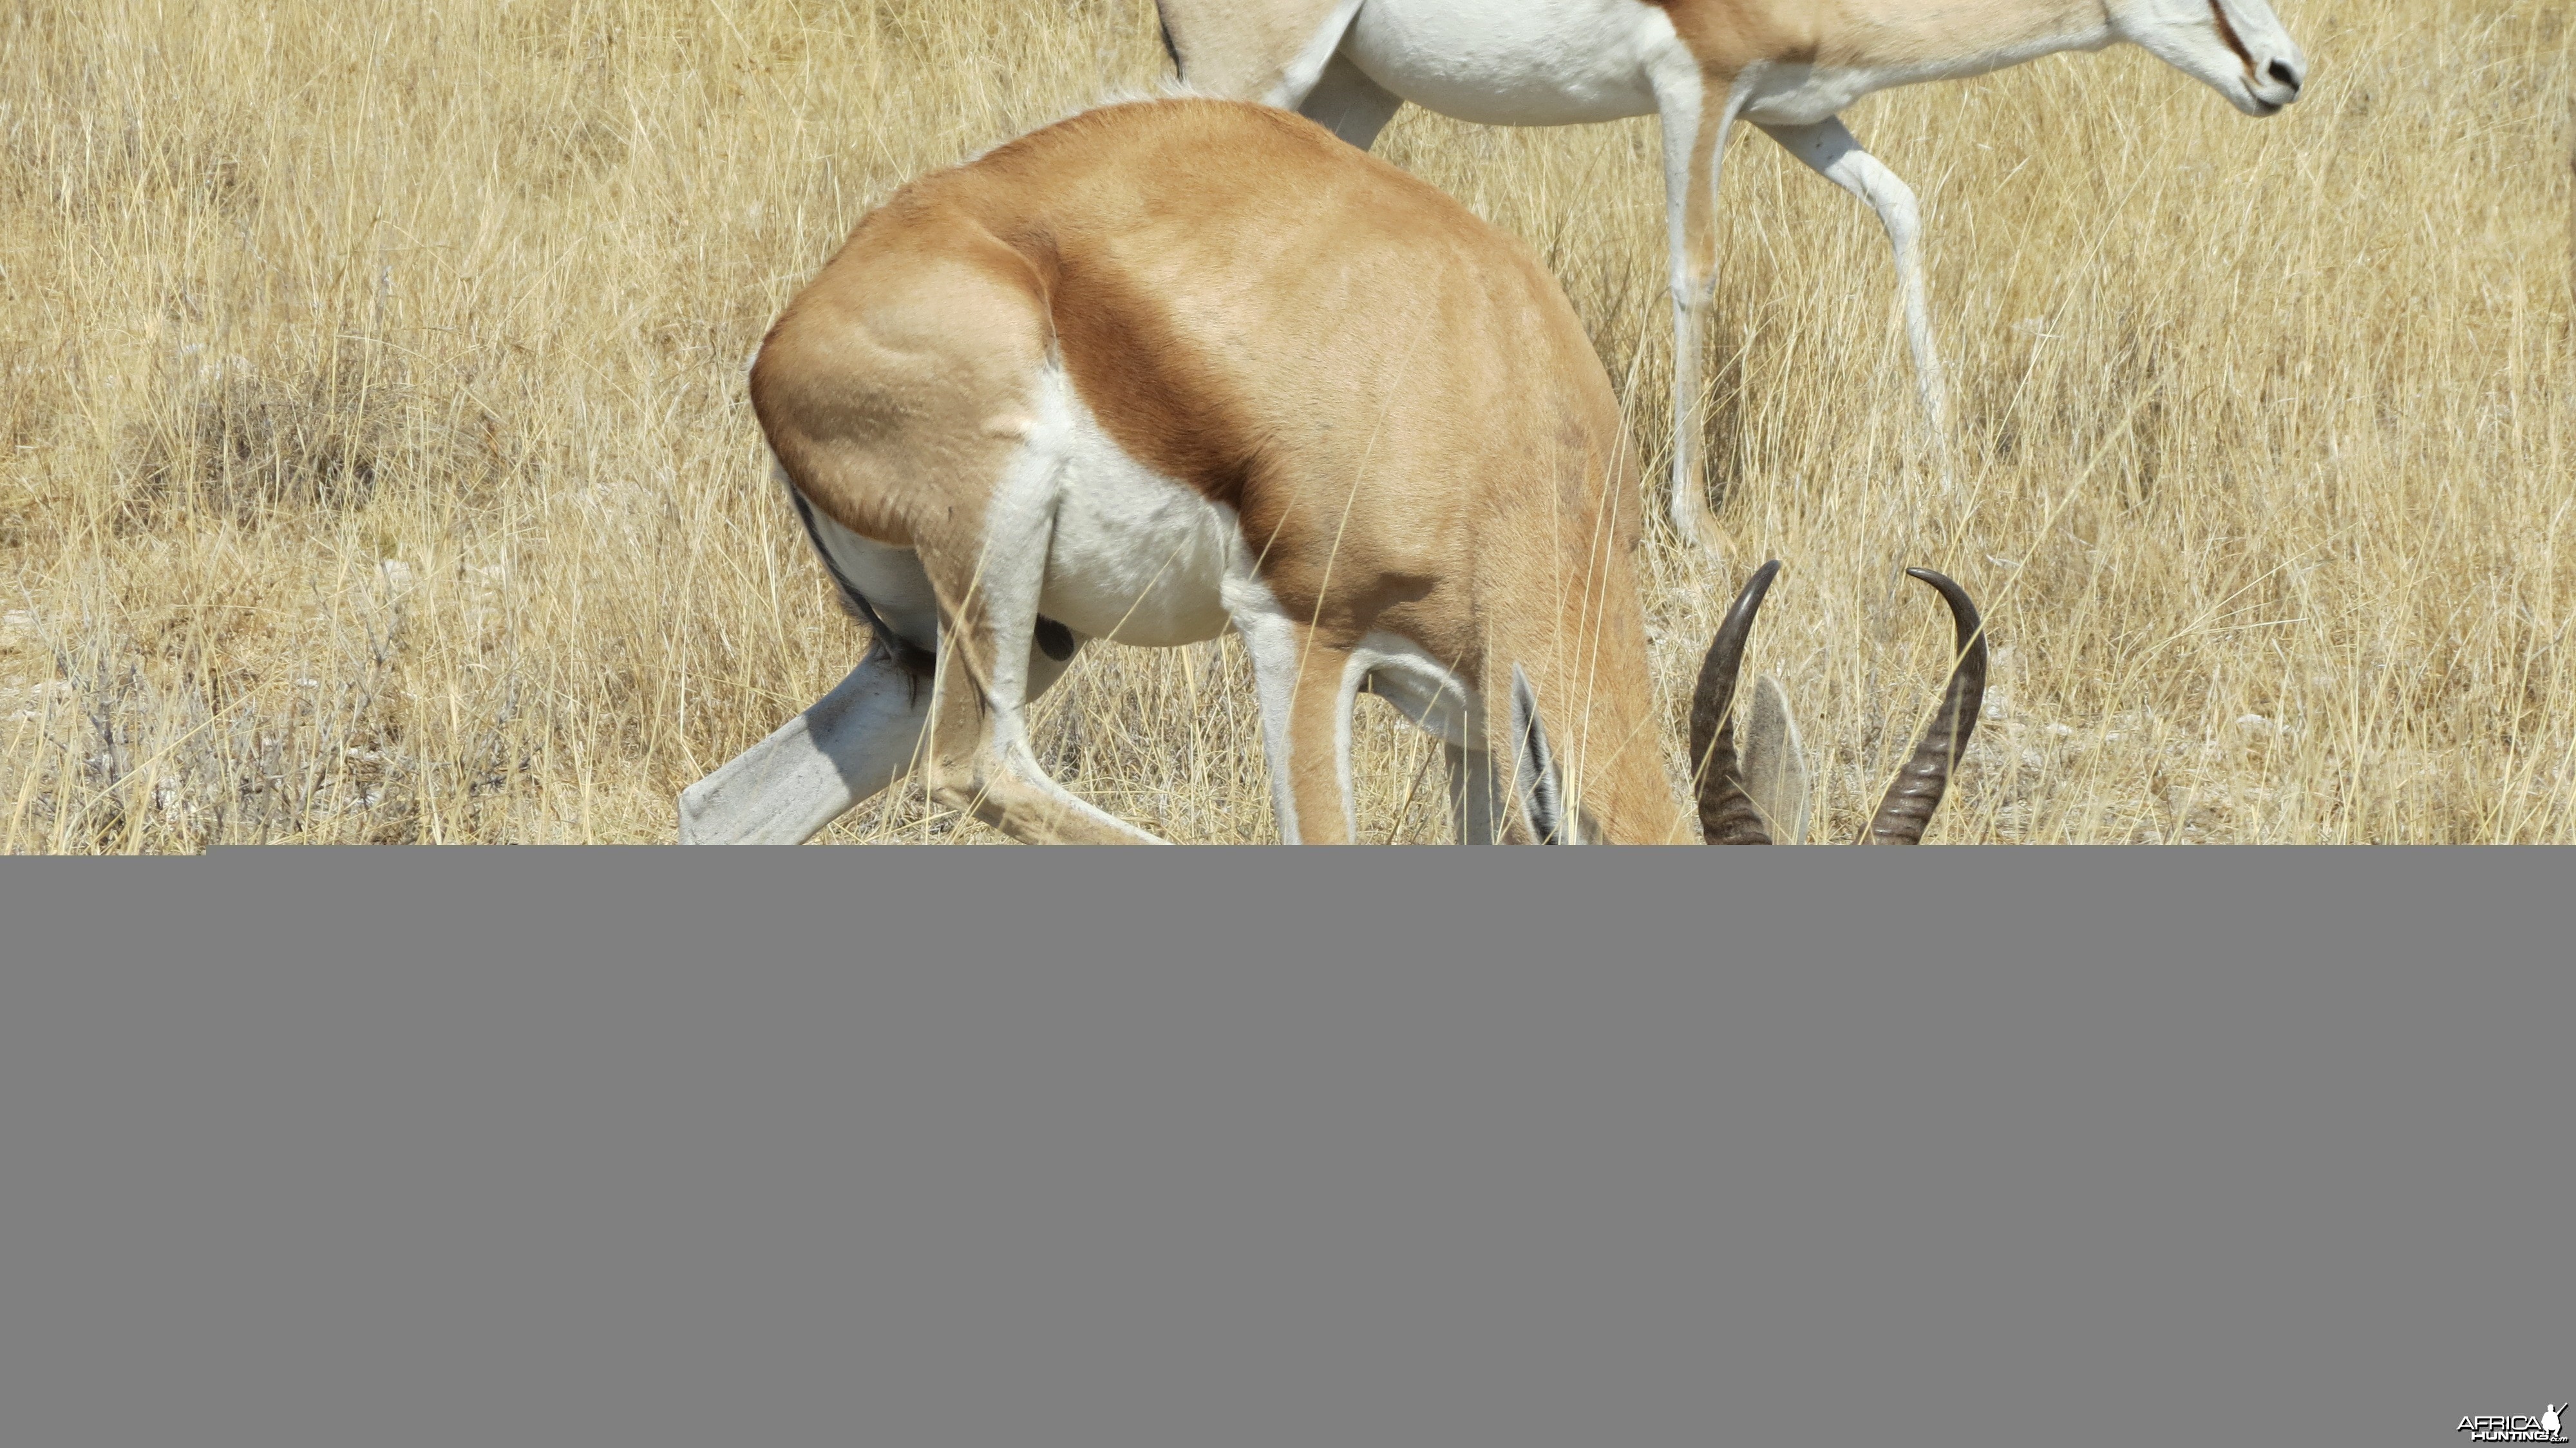 Springbok at Etosha National Park